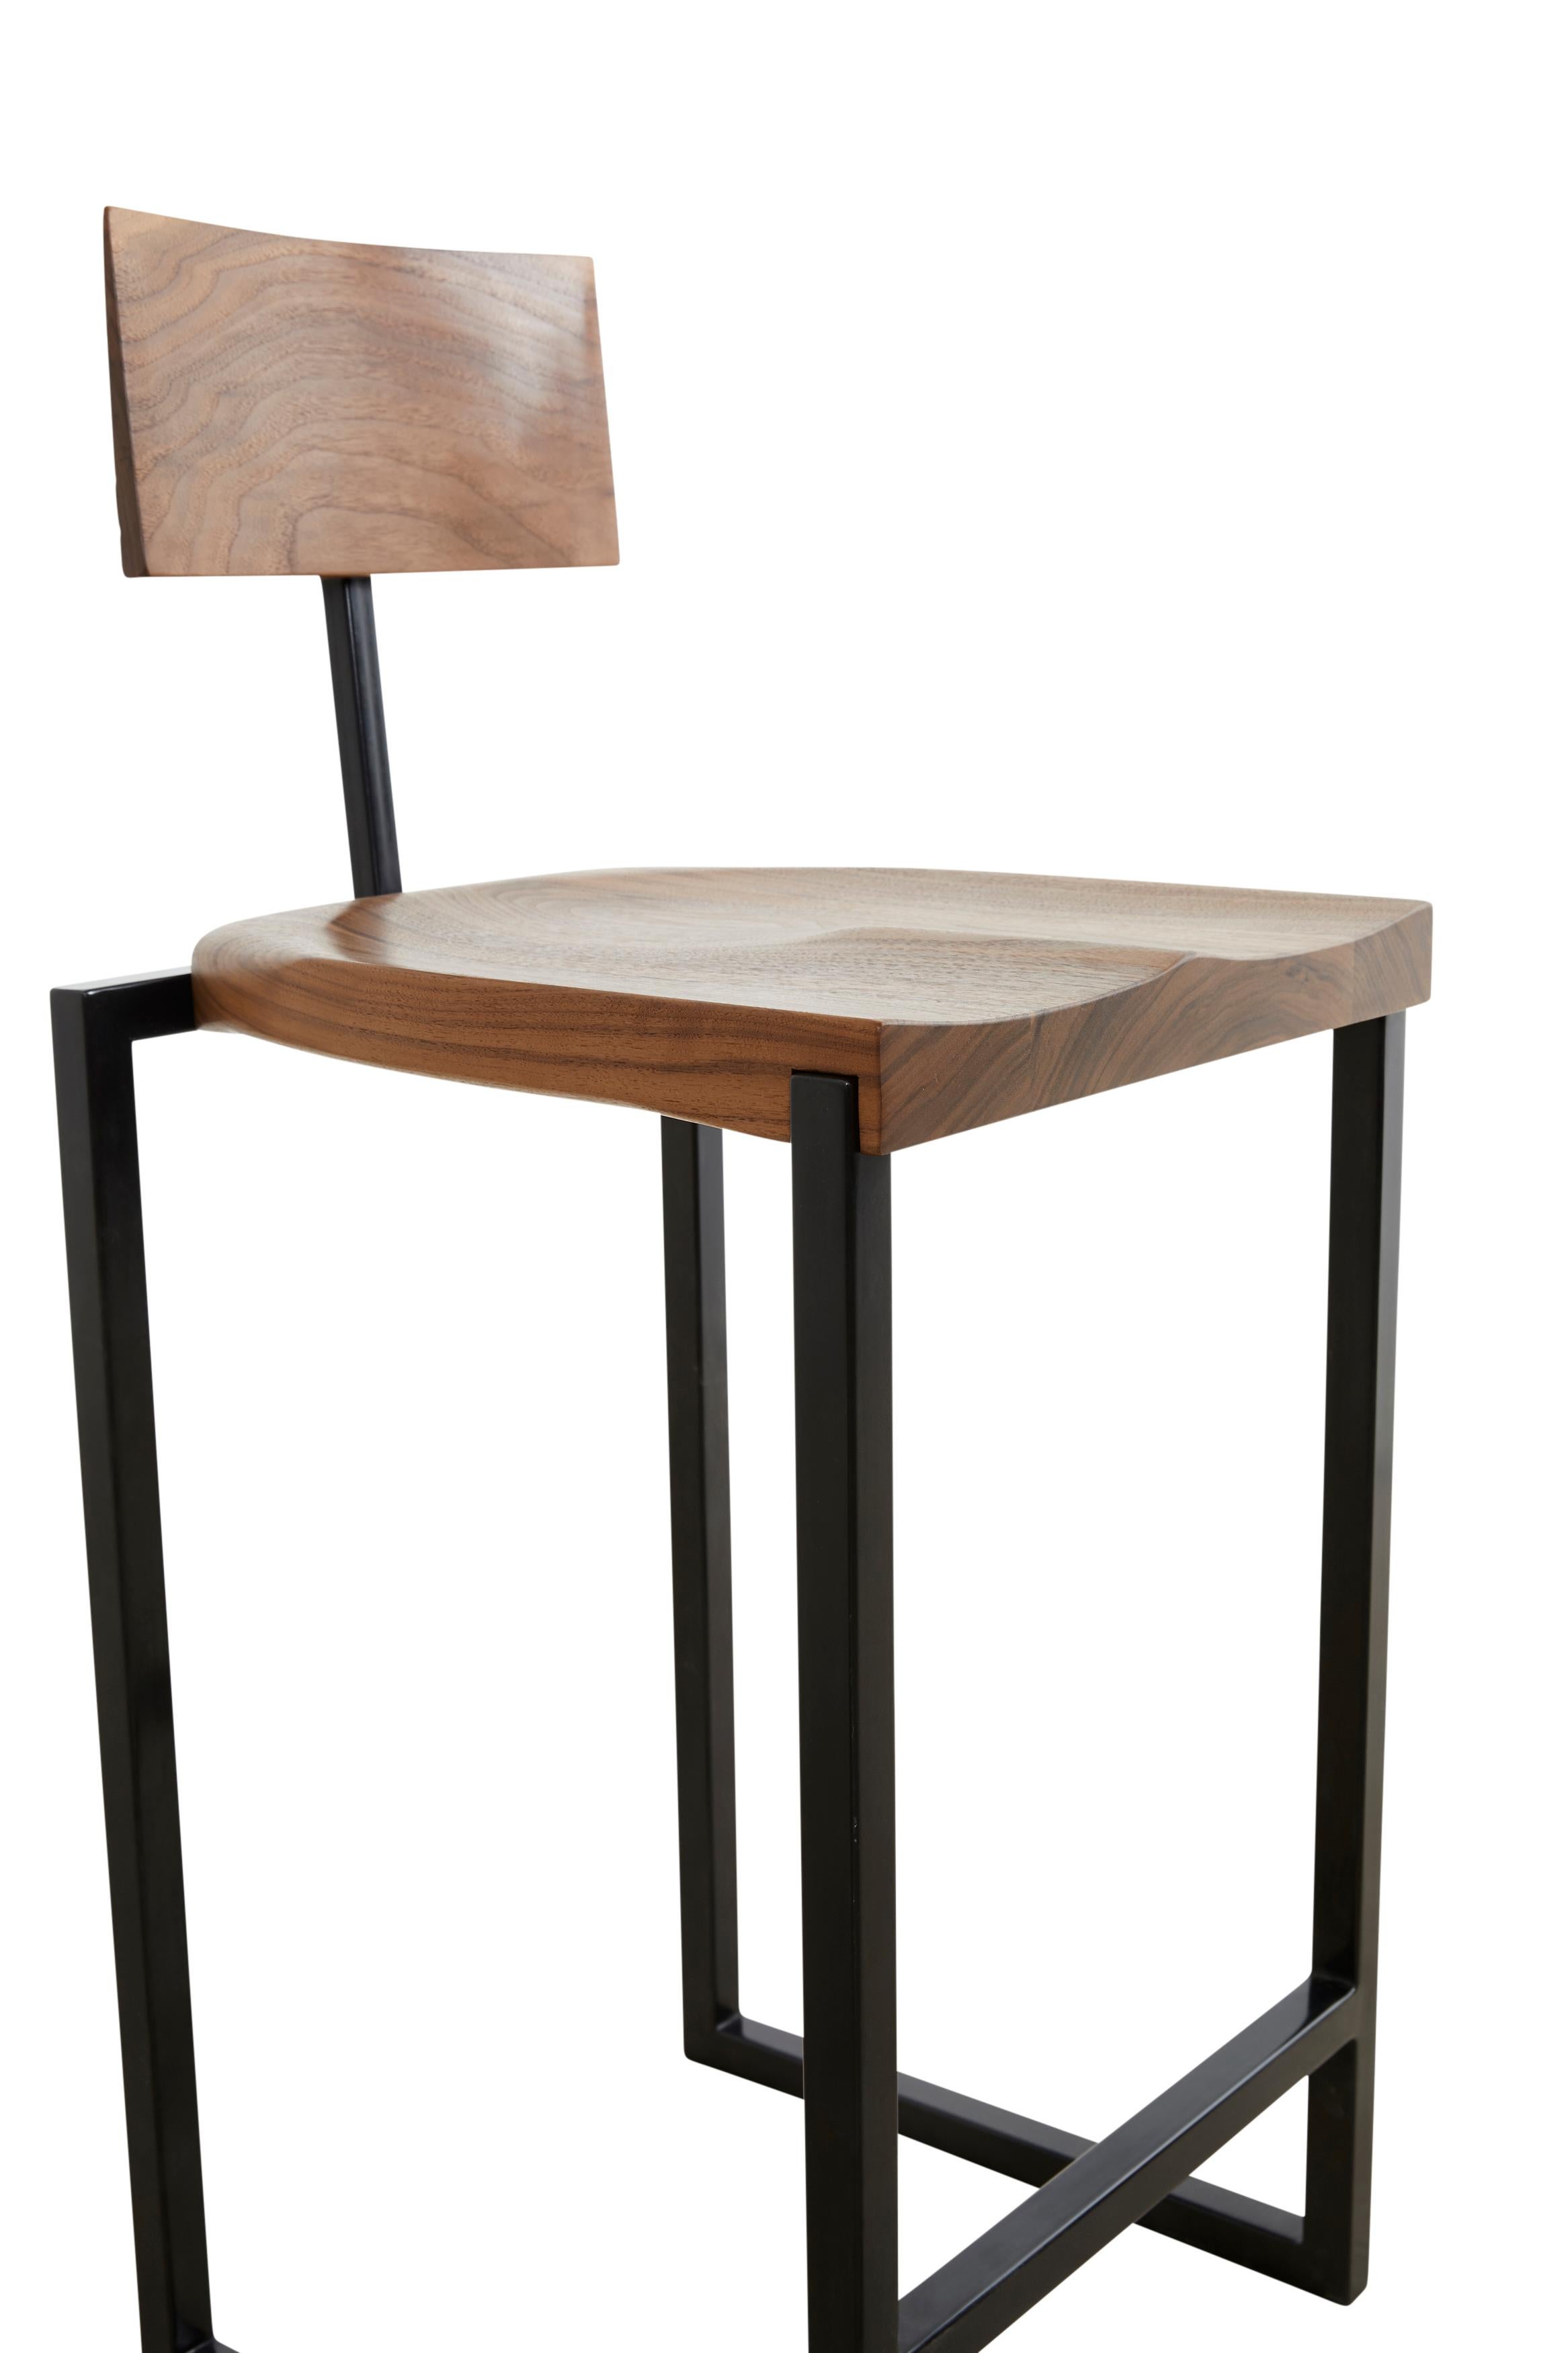 hand shaped stool